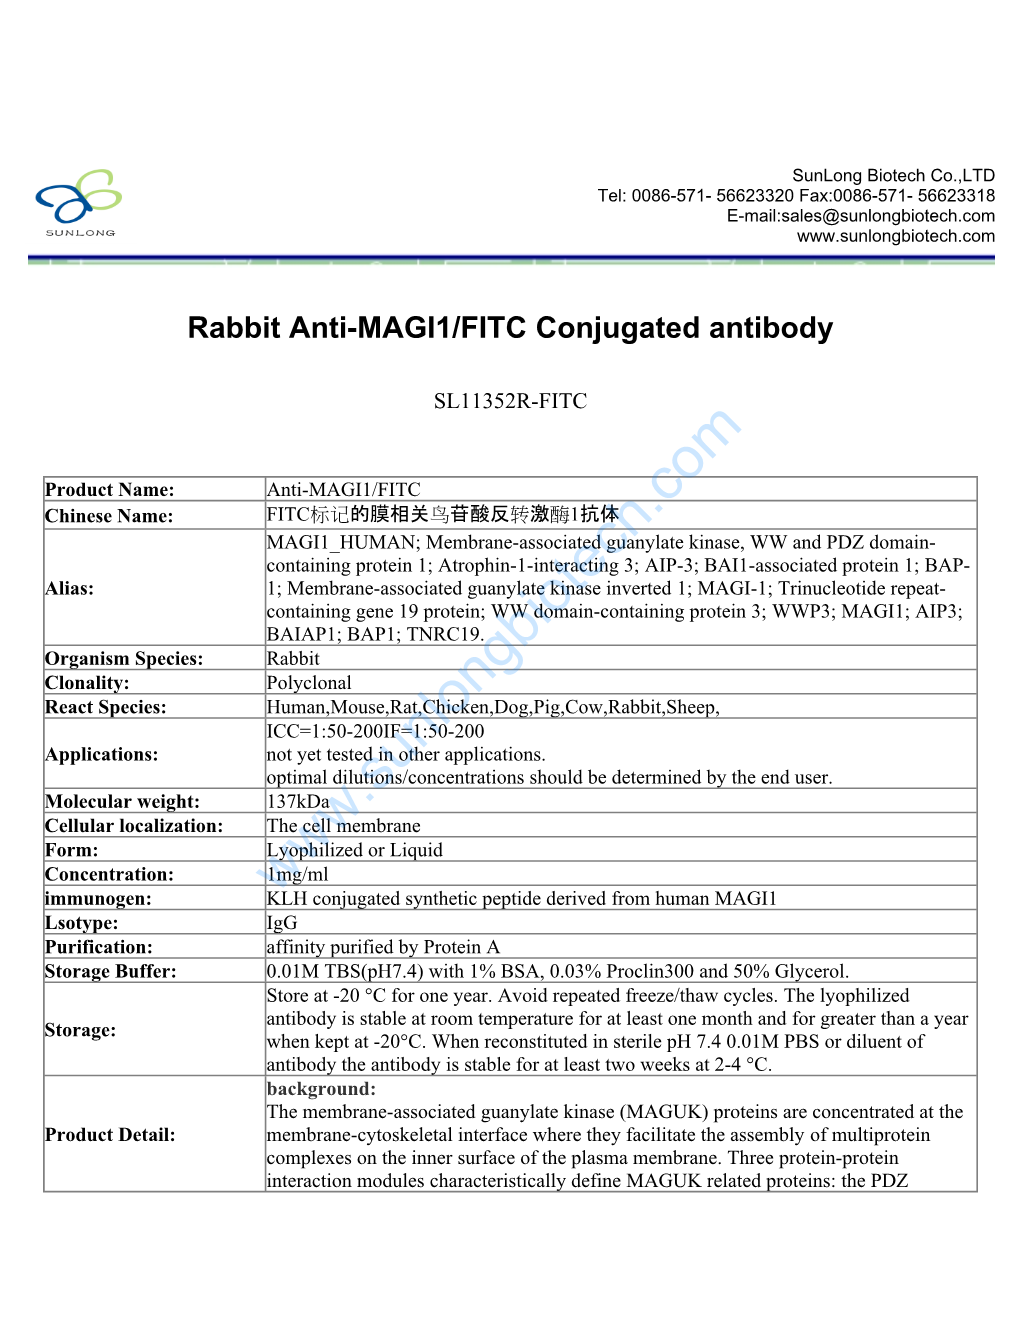 Rabbit Anti-MAGI1/FITC Conjugated Antibody